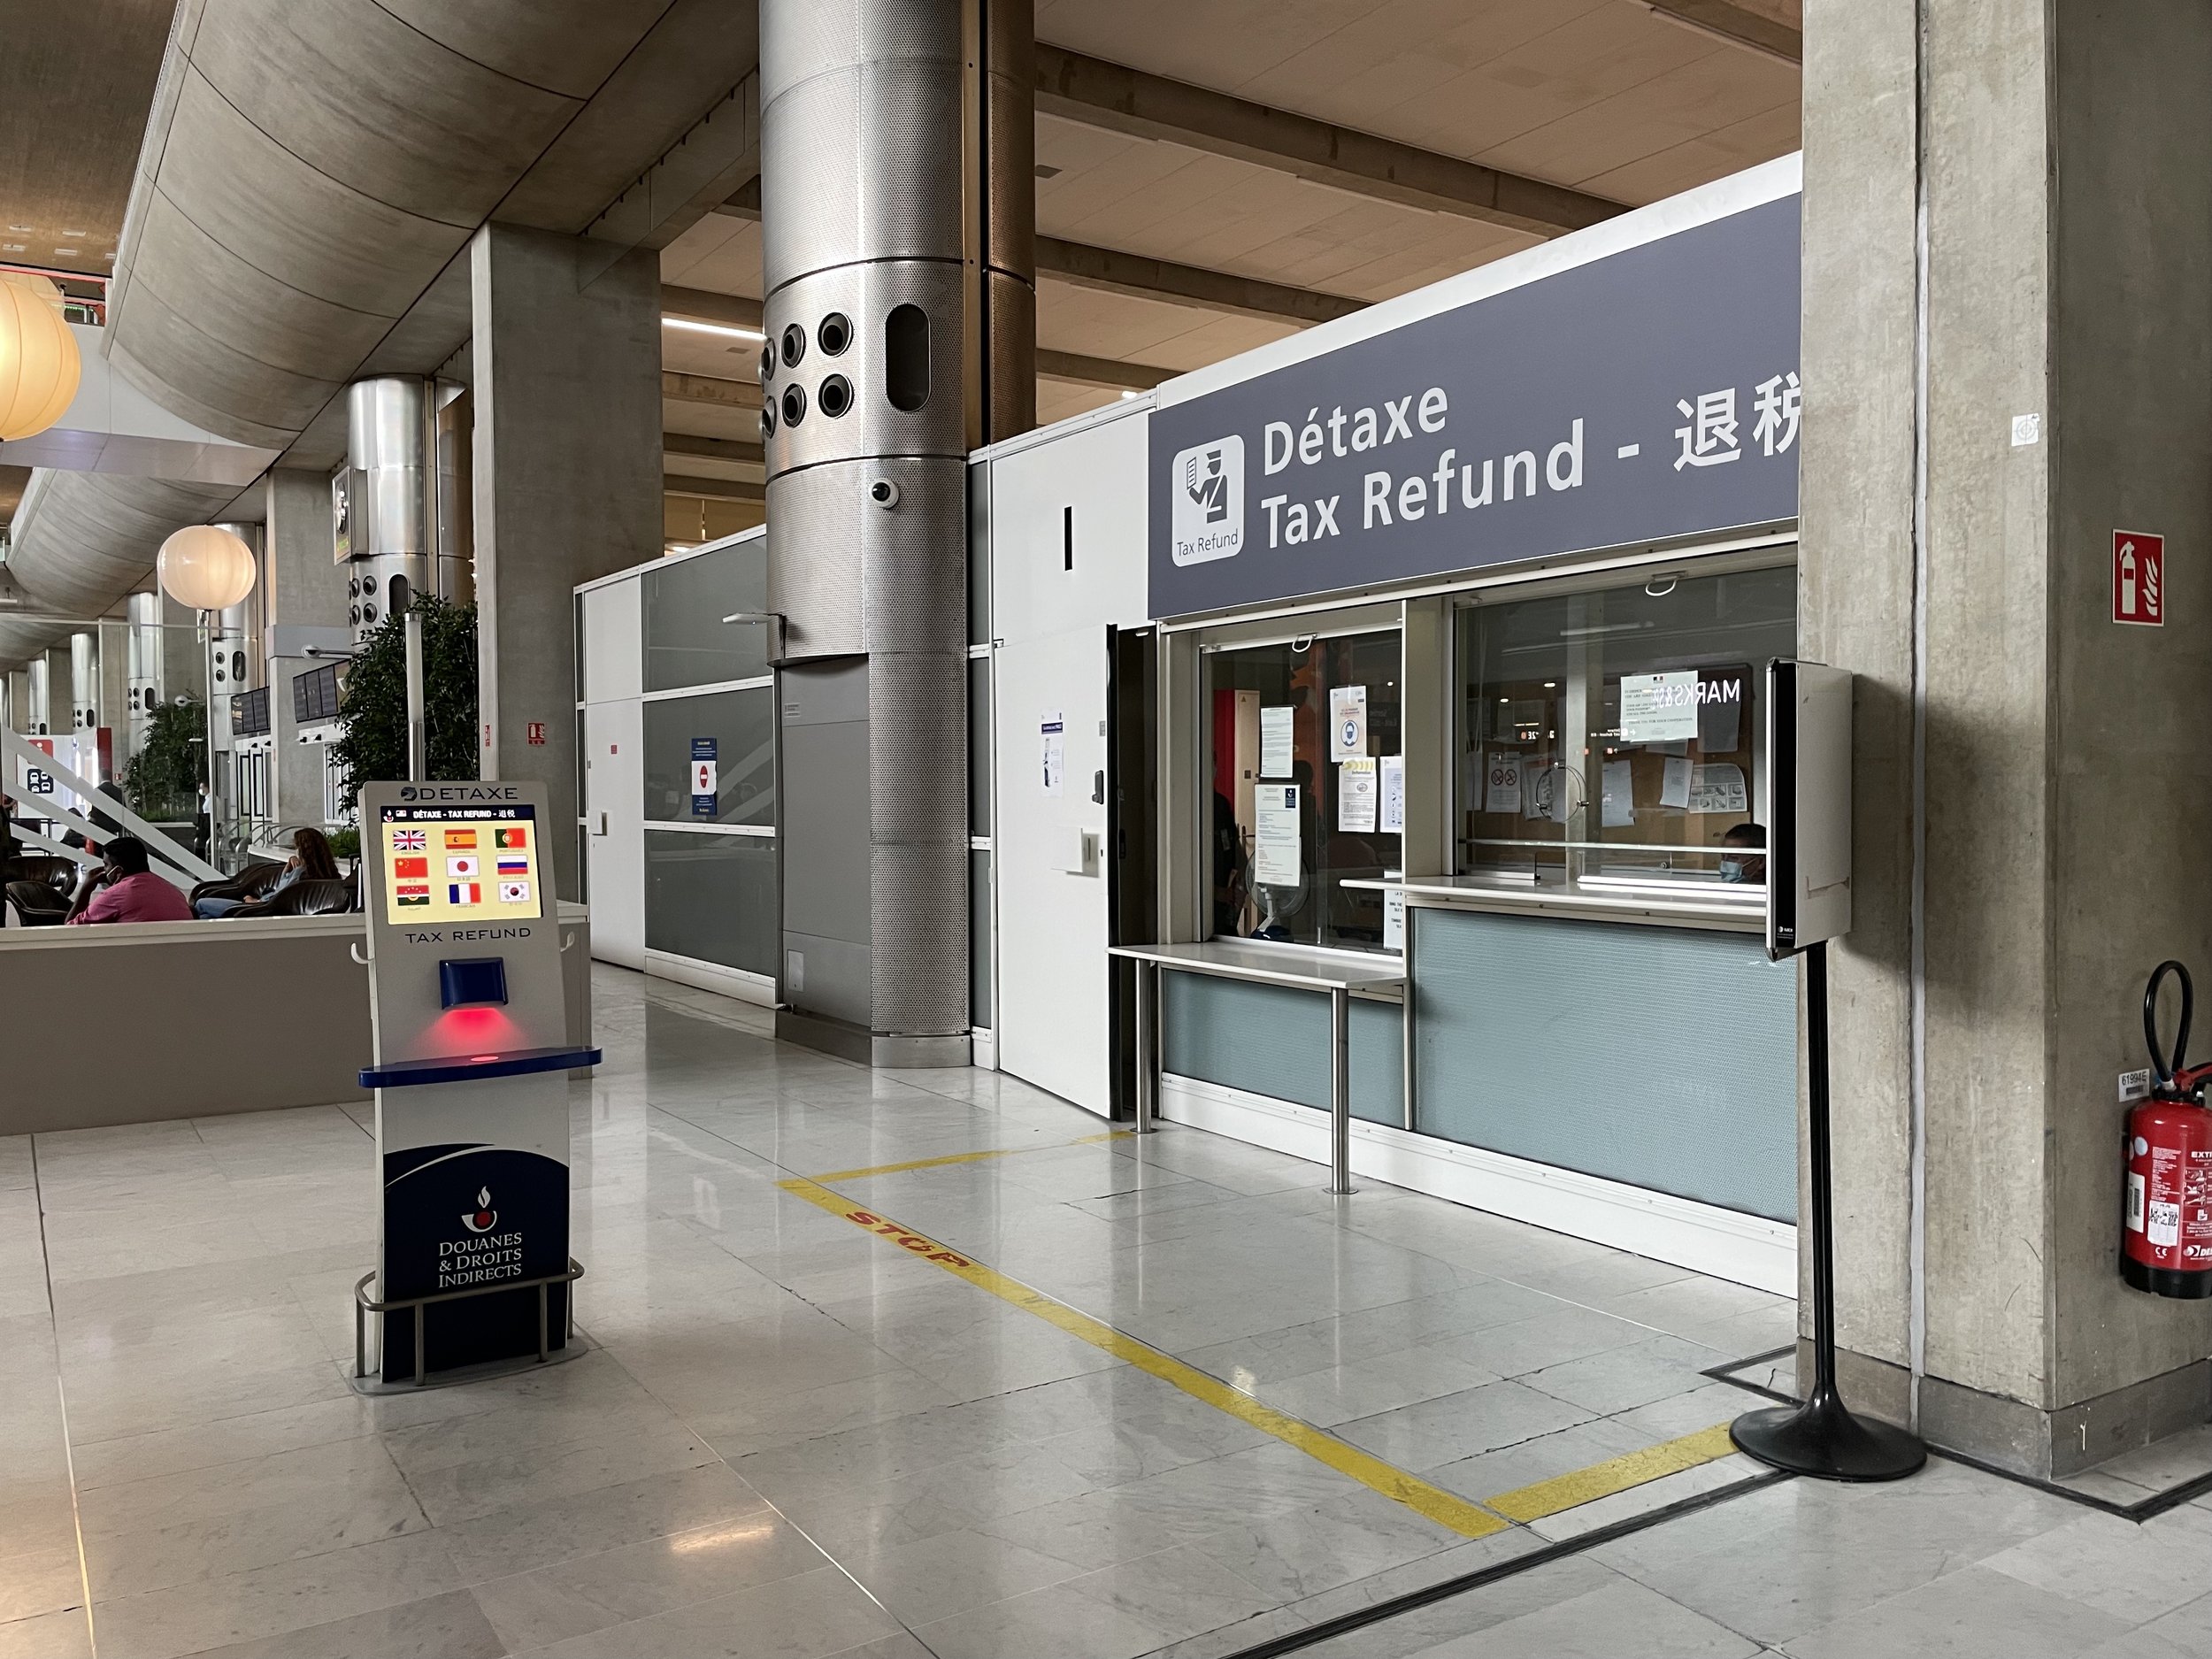 How to get your VAT refund in Paris Charles de Gaulle Airport